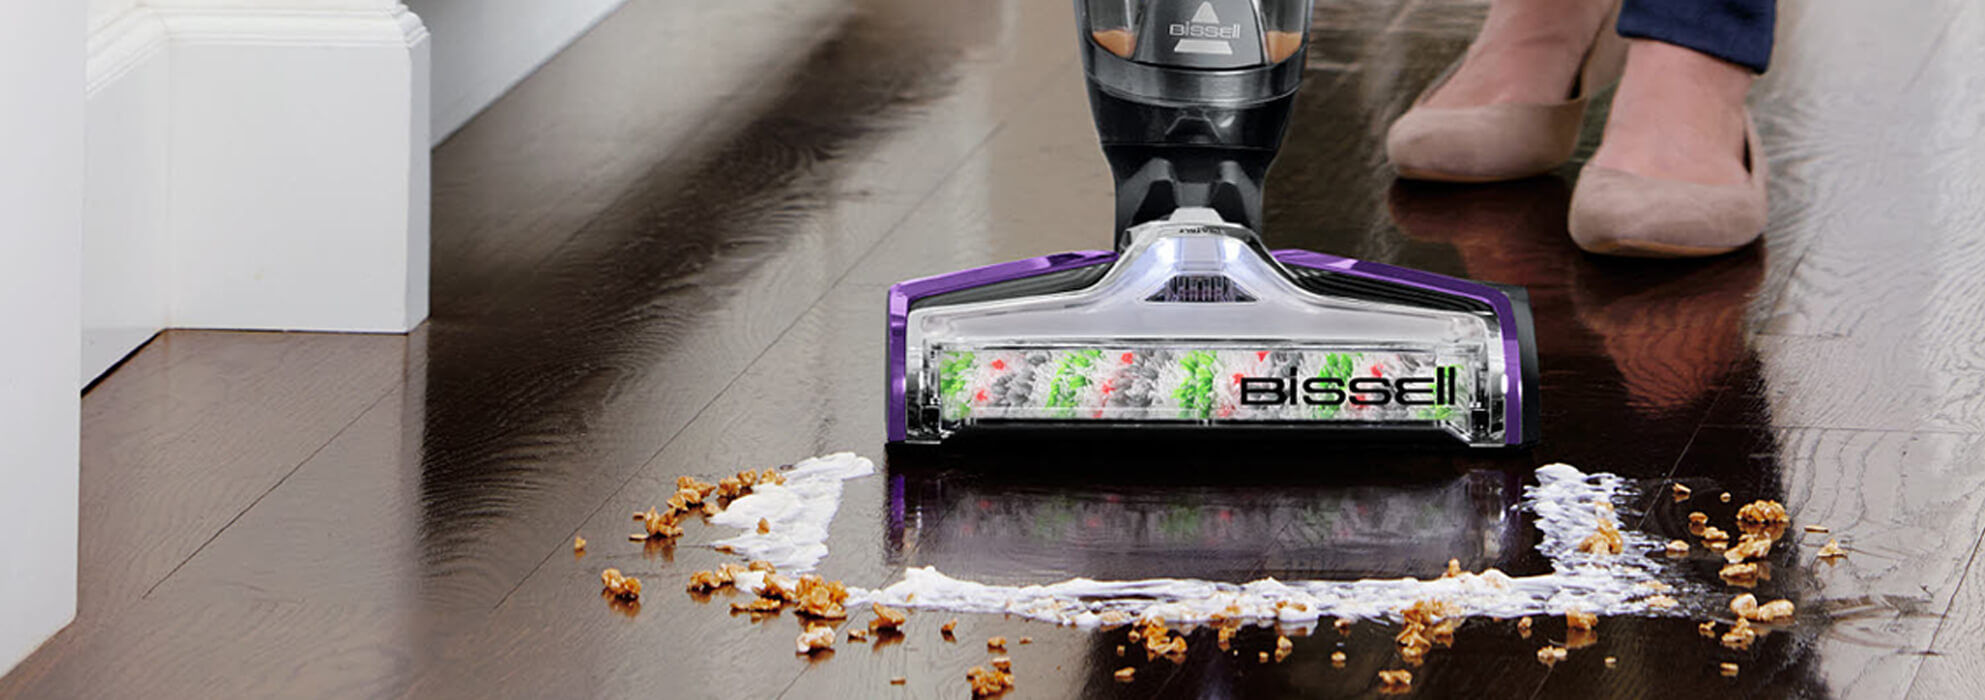 Carpet Pet Floor Brush+Filter Cleaning Kit For Bissell CrossWave Sweeper Robot 